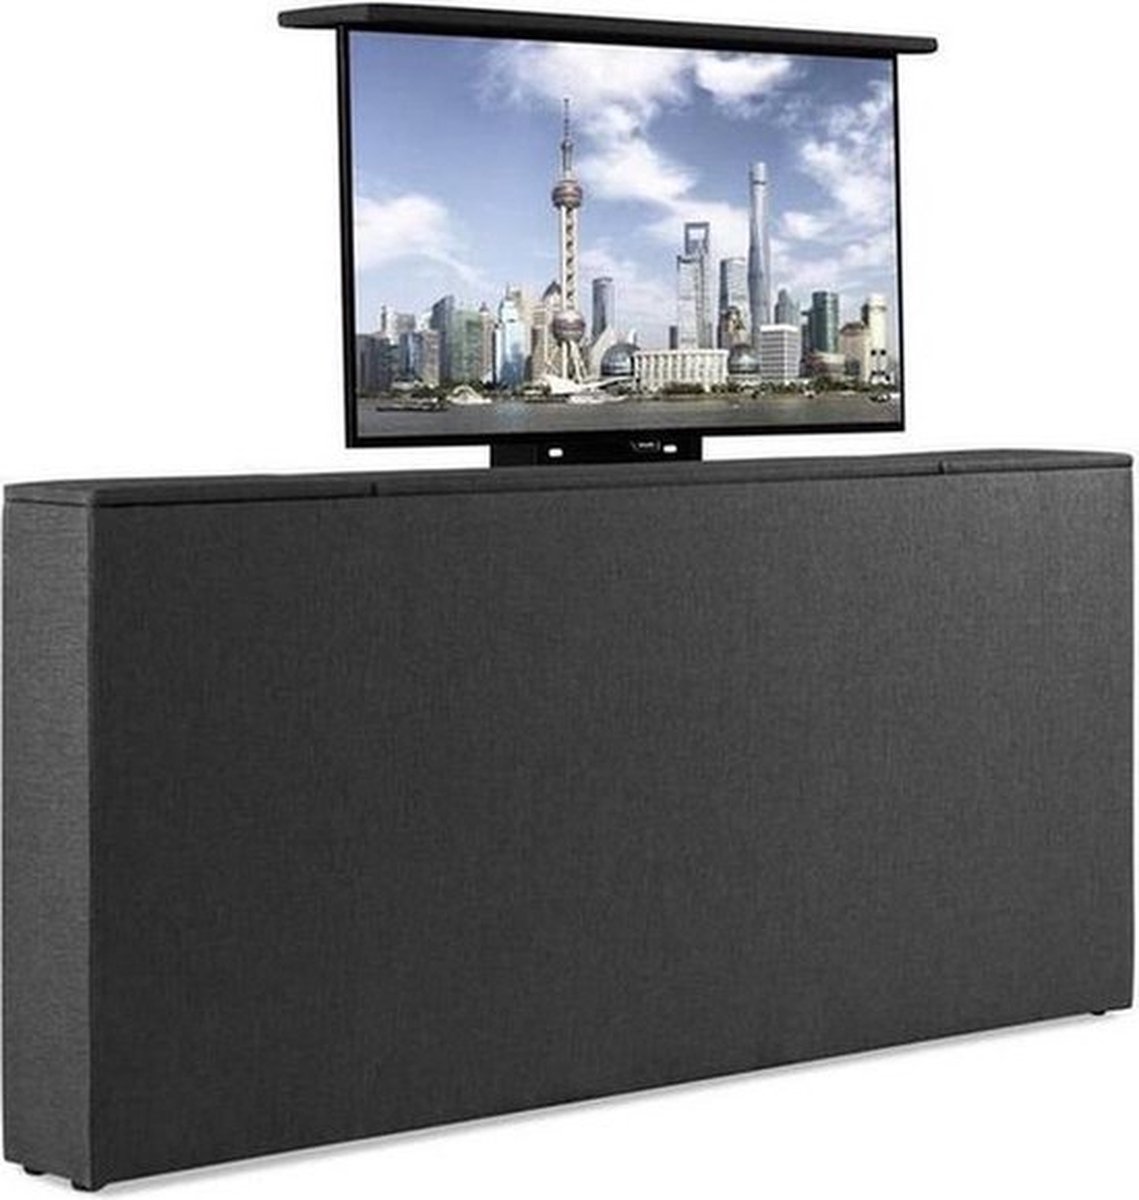 Bedonderdeel - BedNL TV-Lift Systeem in Voetbord - Max. 42 inch TV - 180 breed 85 Hoog 22 Breed- Antracite Stof